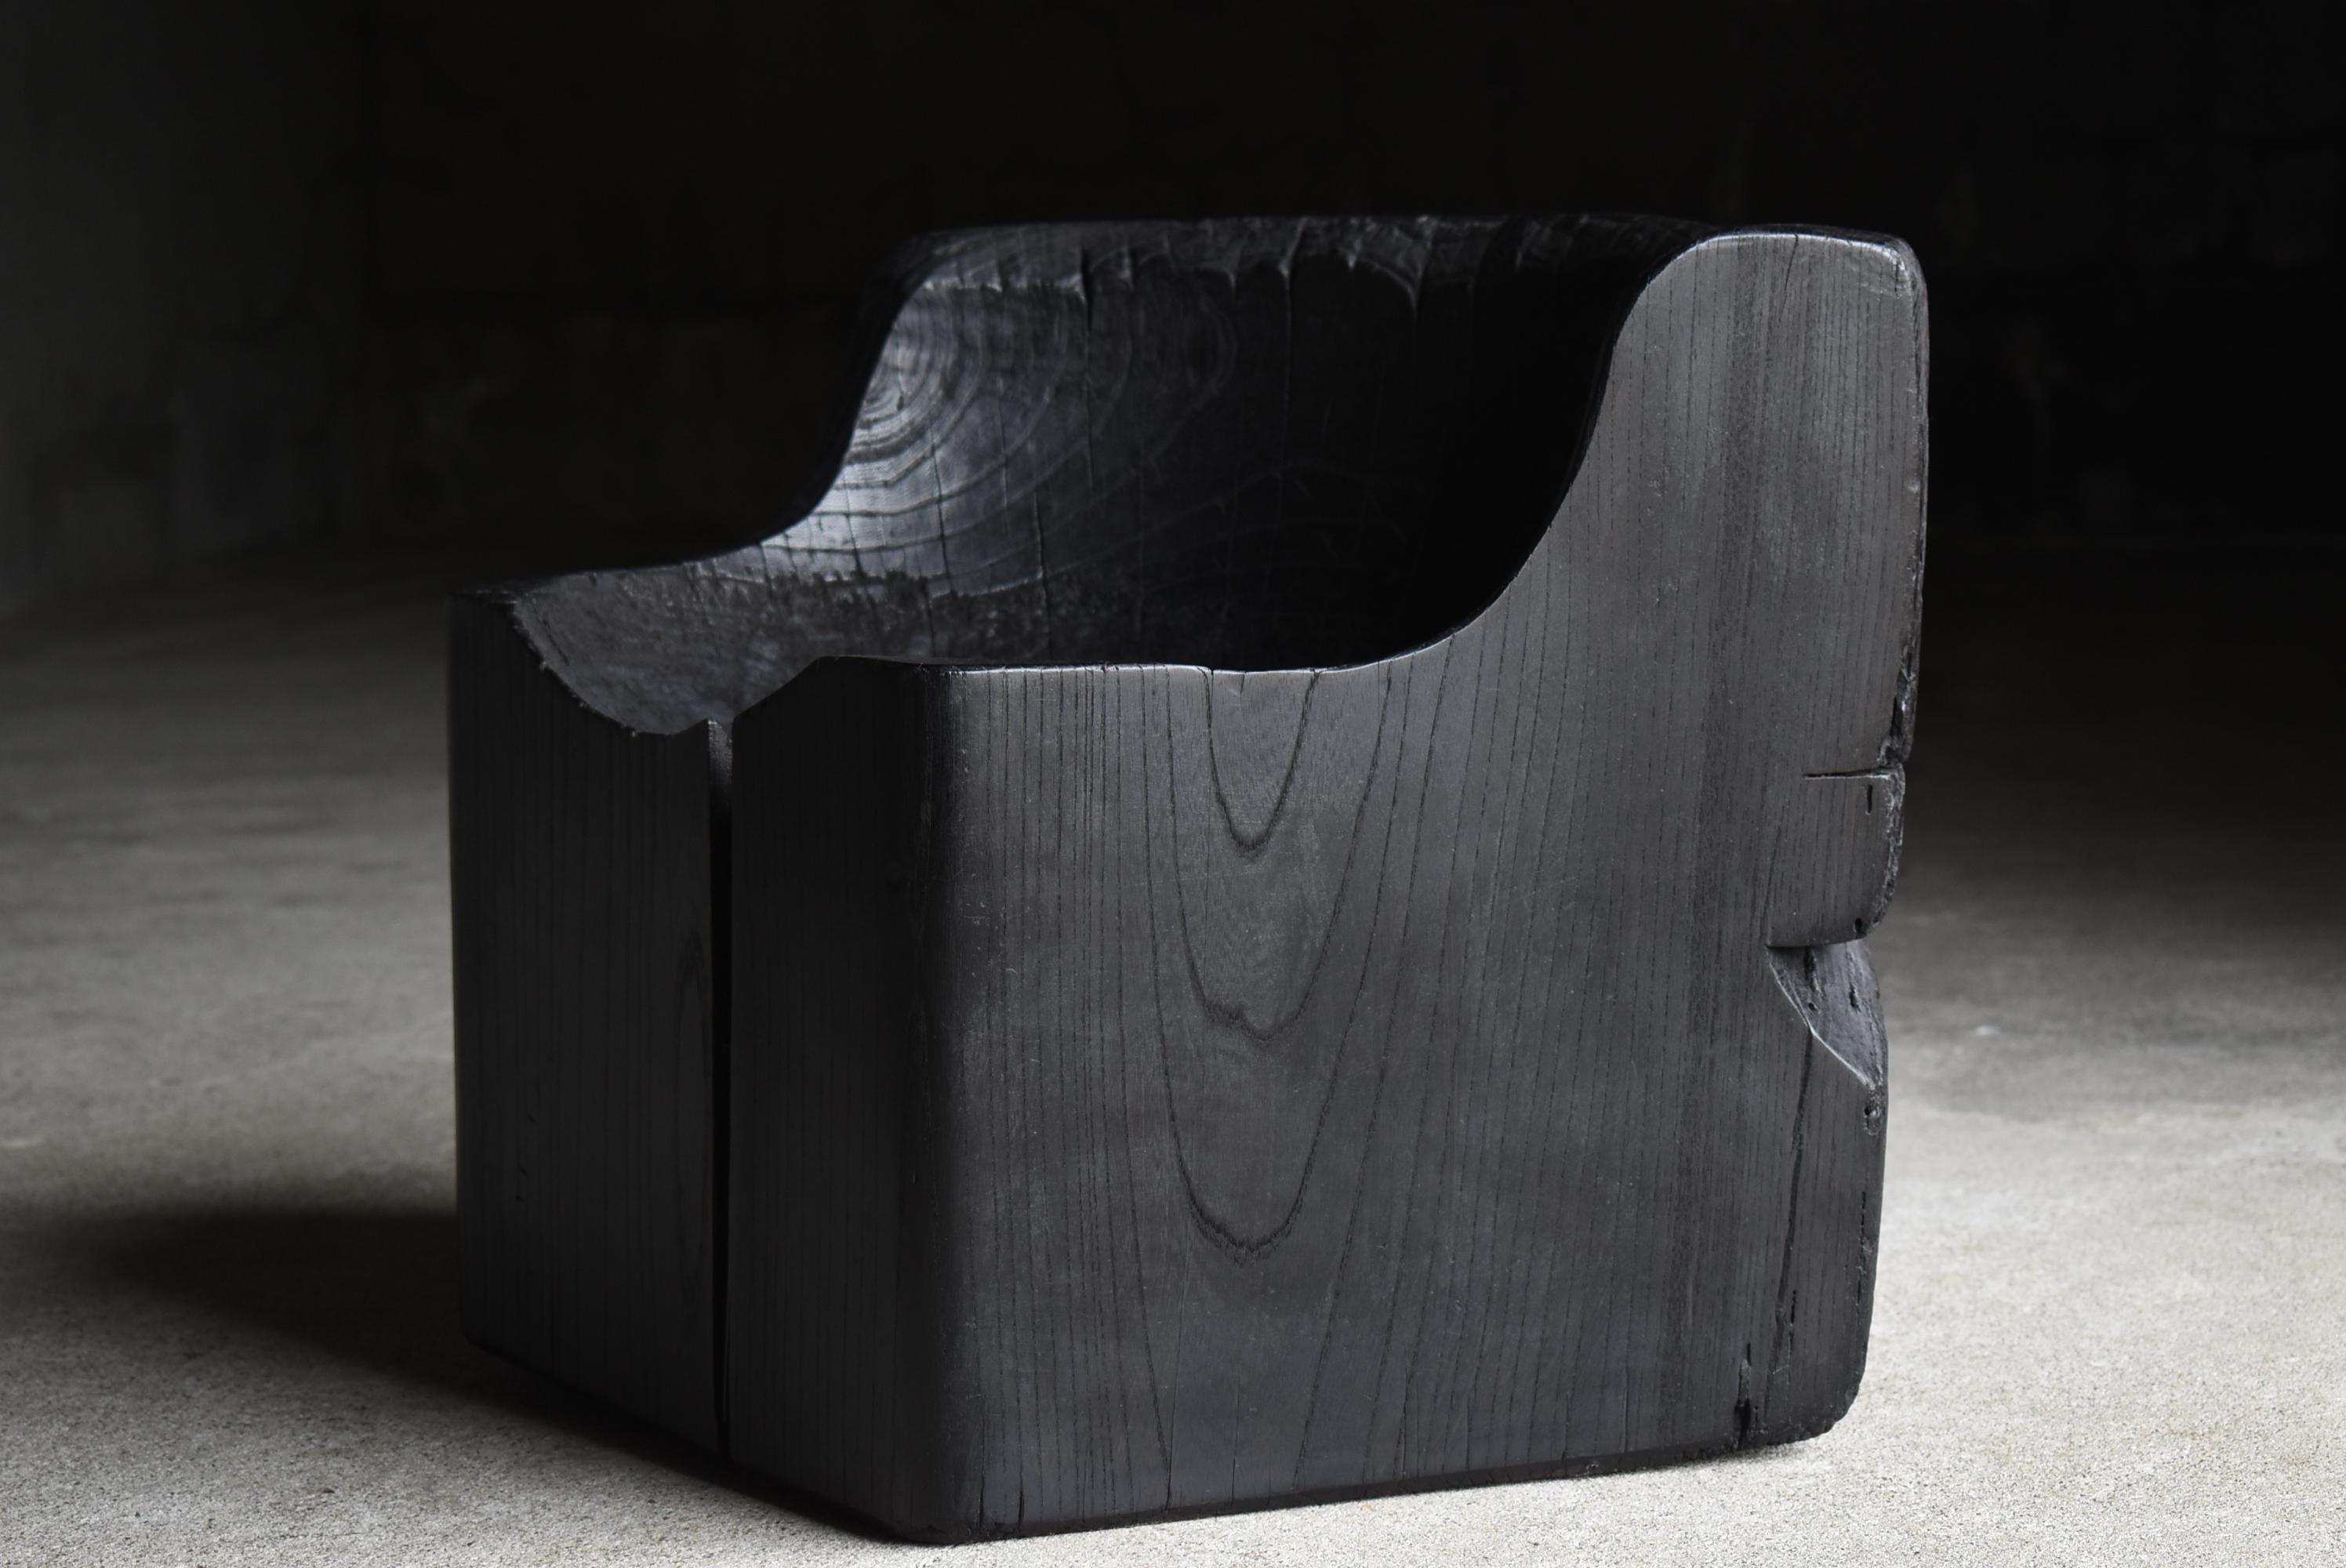 Japanese Antique Primitive Black Chair 1860s-1900s / Seating Wabi Sabi 5